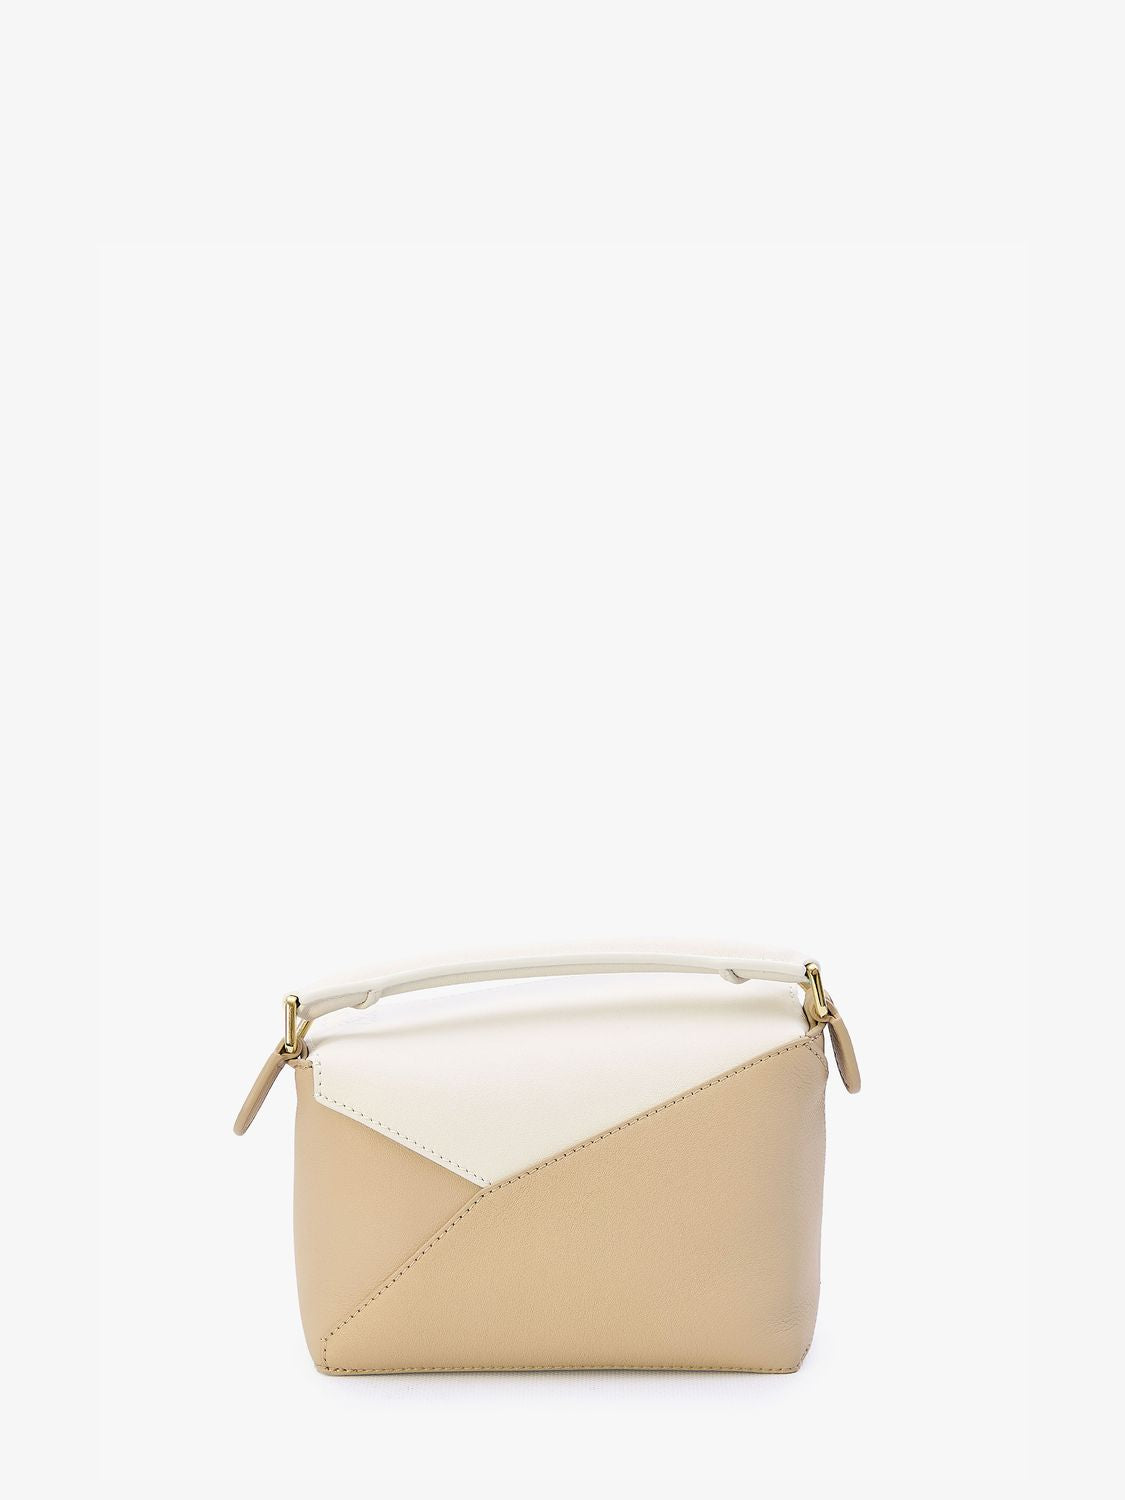 LOEWE Mini Puzzle Geometric Calfskin Handbag in White and Beige with Adjustable Strap 18x12.5x8cm